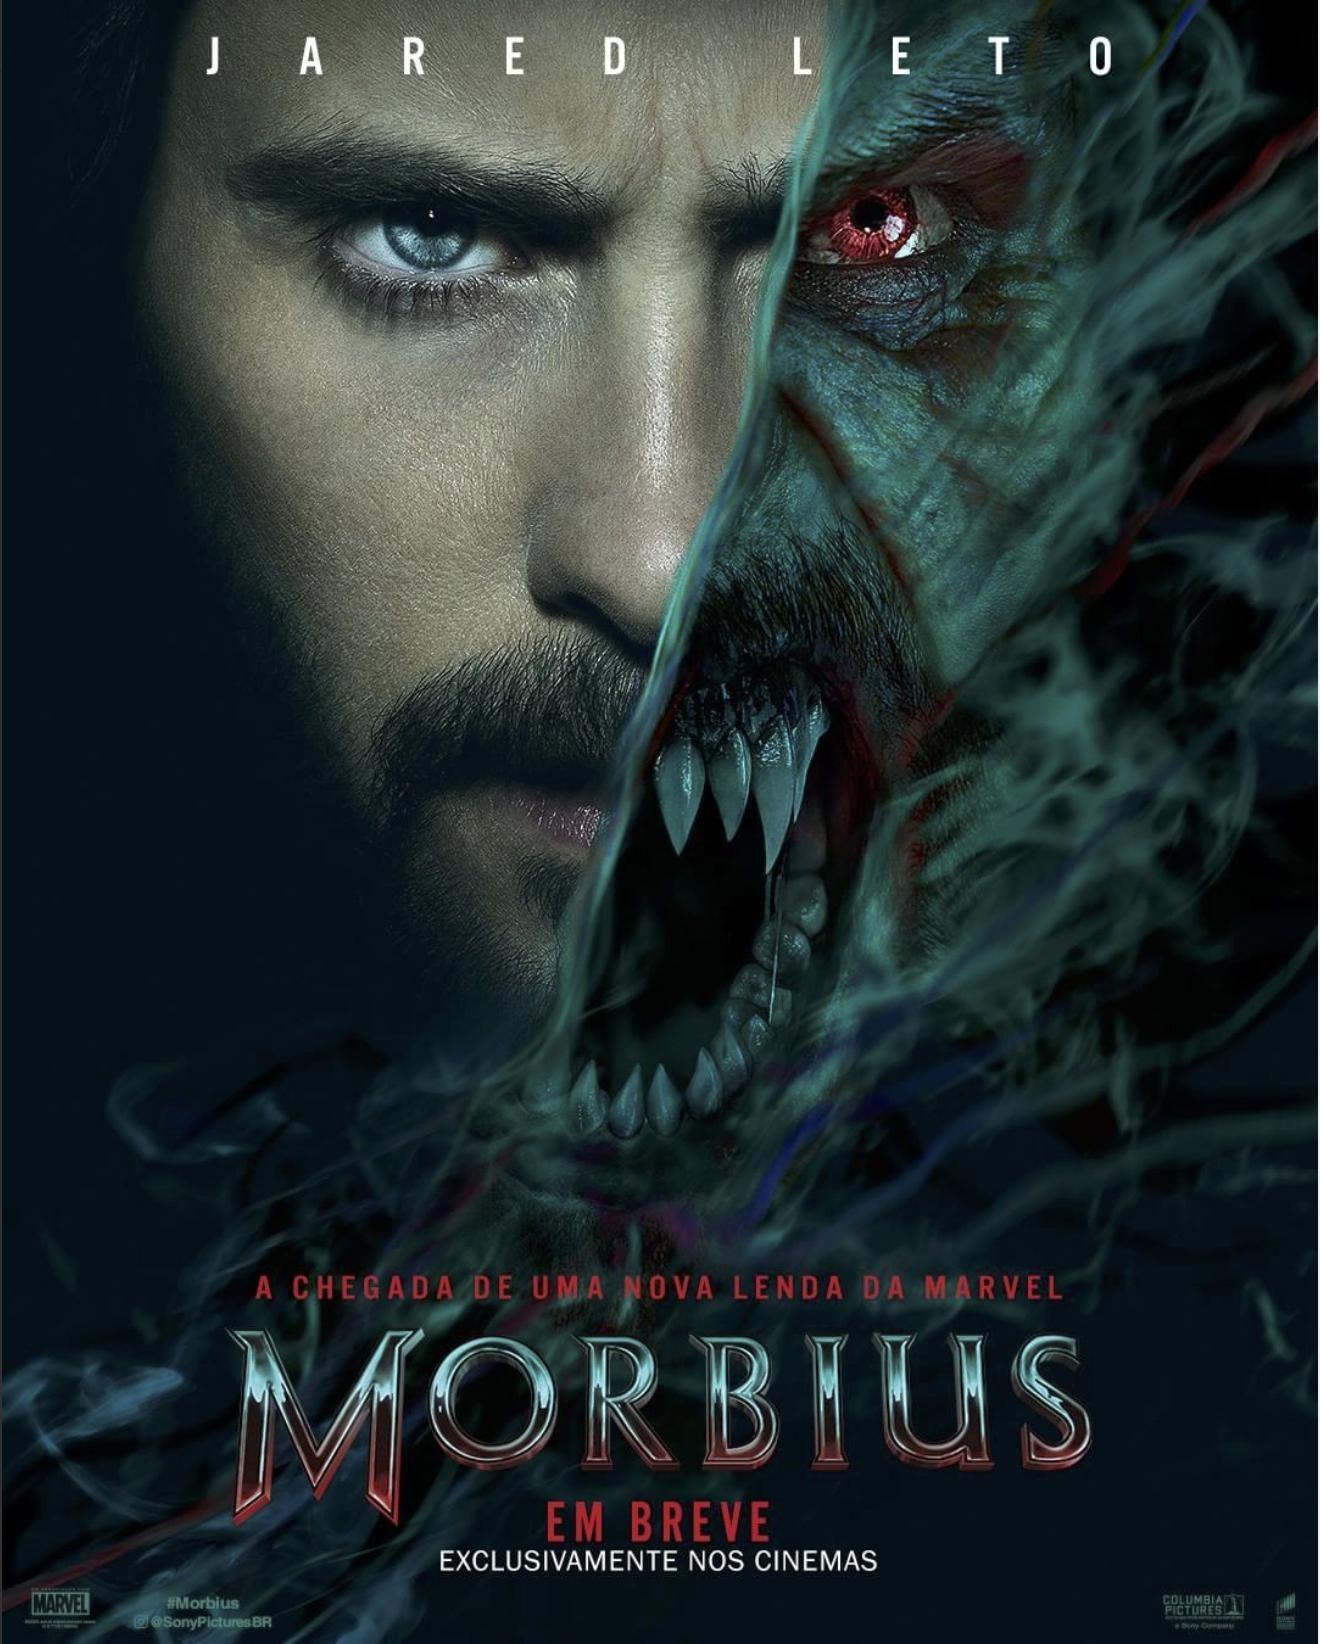 Morbius (2022) Hindi Dubbed HDRip download full movie